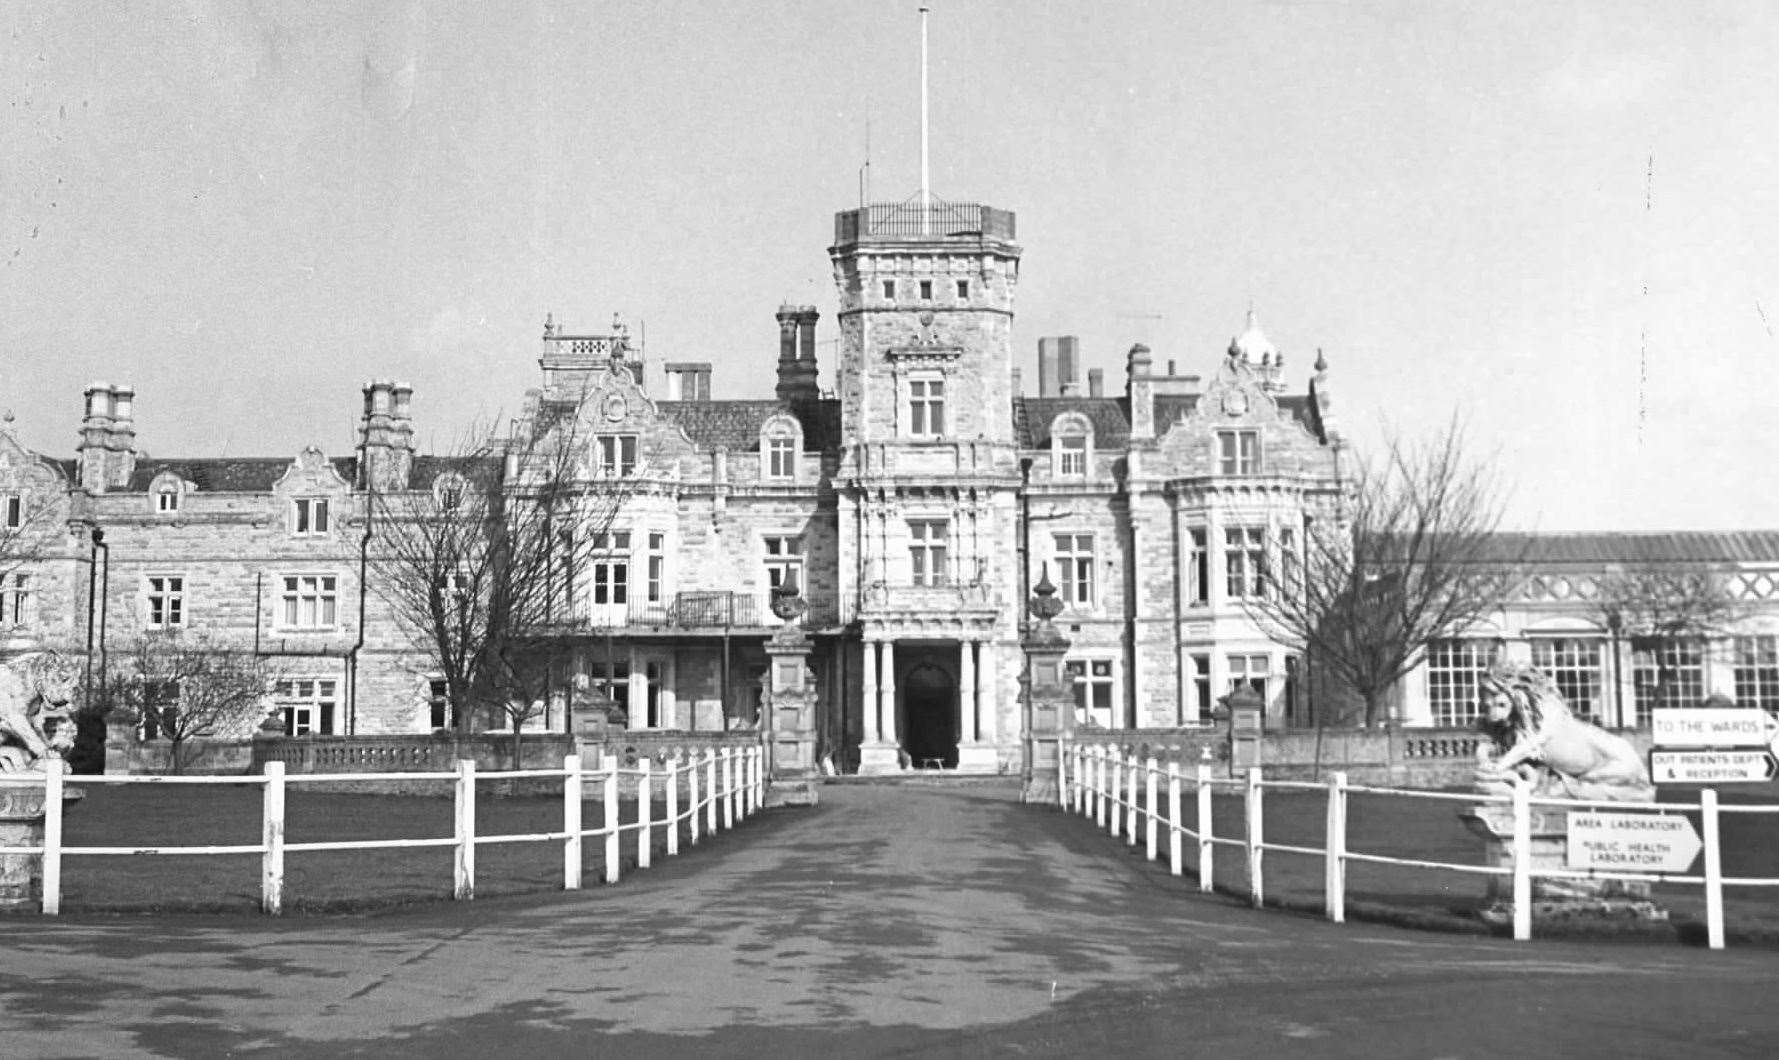 Preston Hall Hospital in 1977